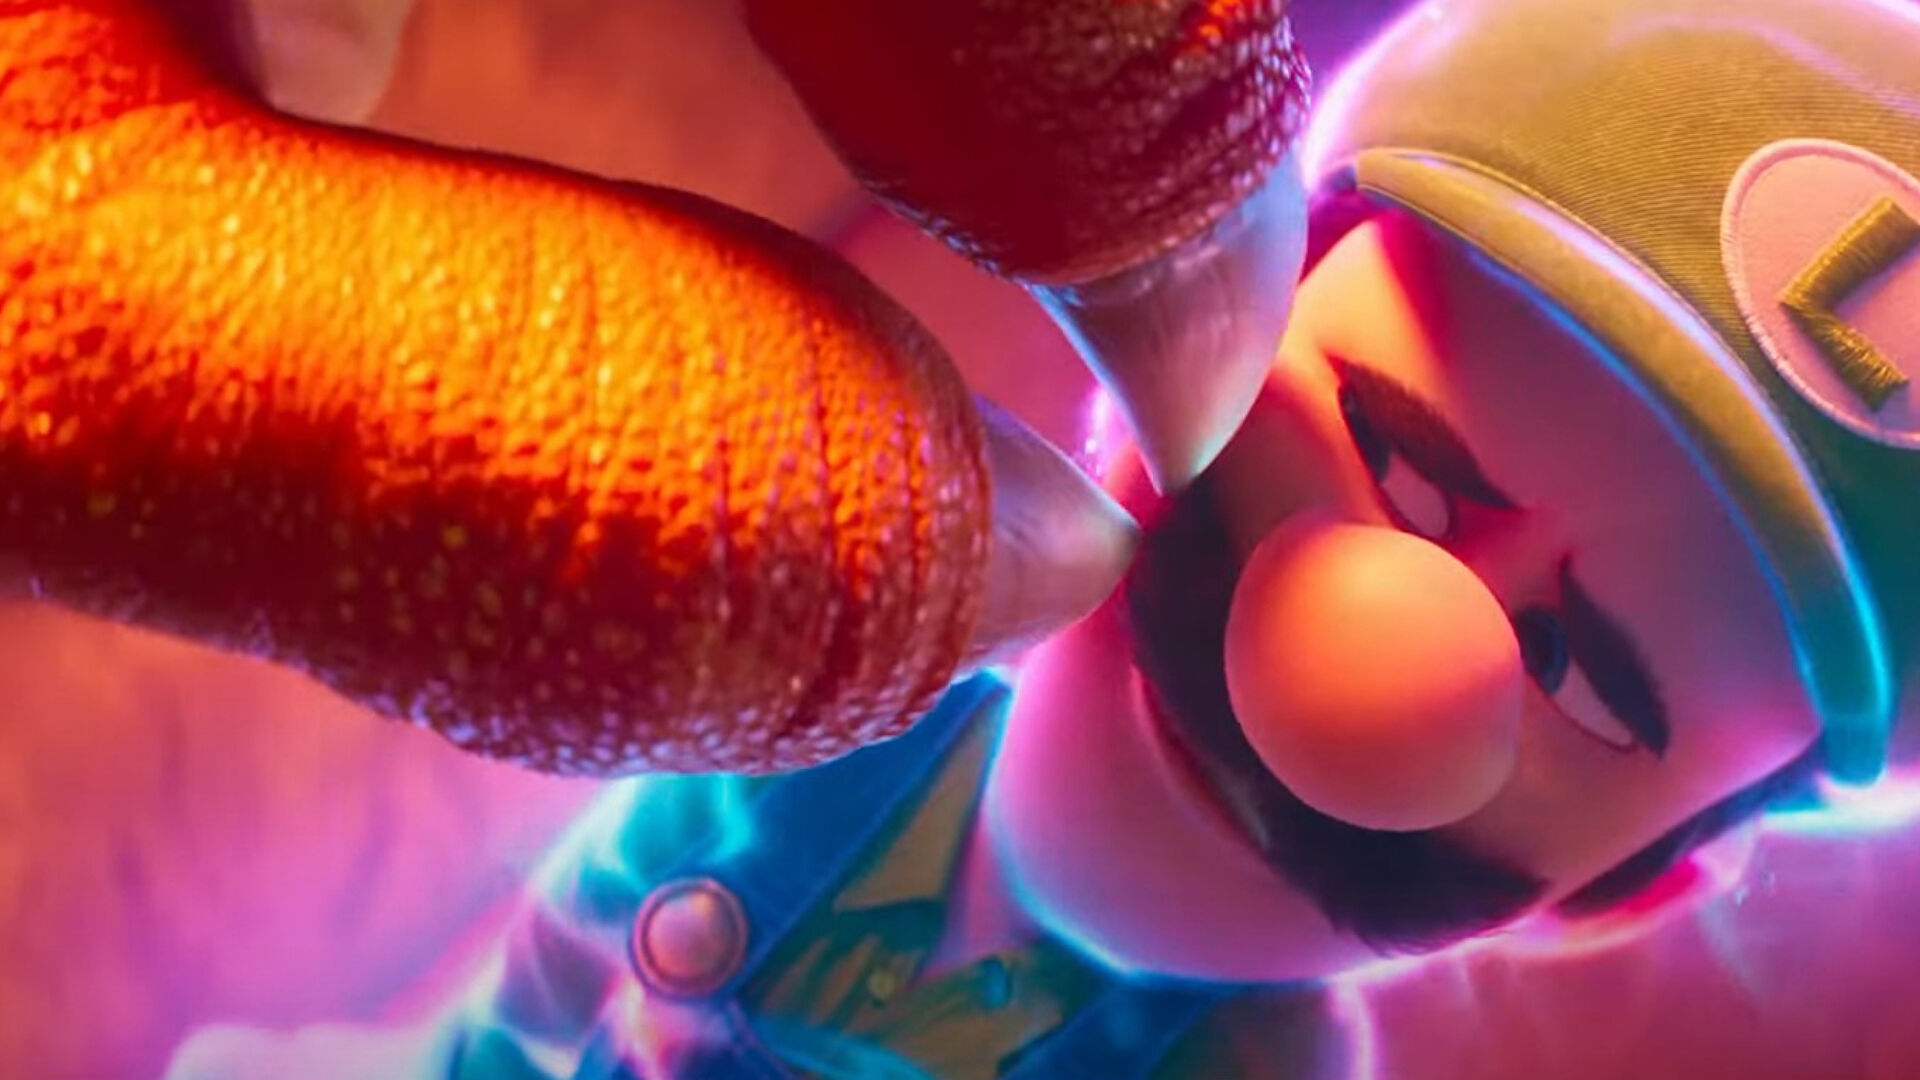 Latest Super Mario Bros. movie trailer shows Mario karting along a stunning Rainbow Road